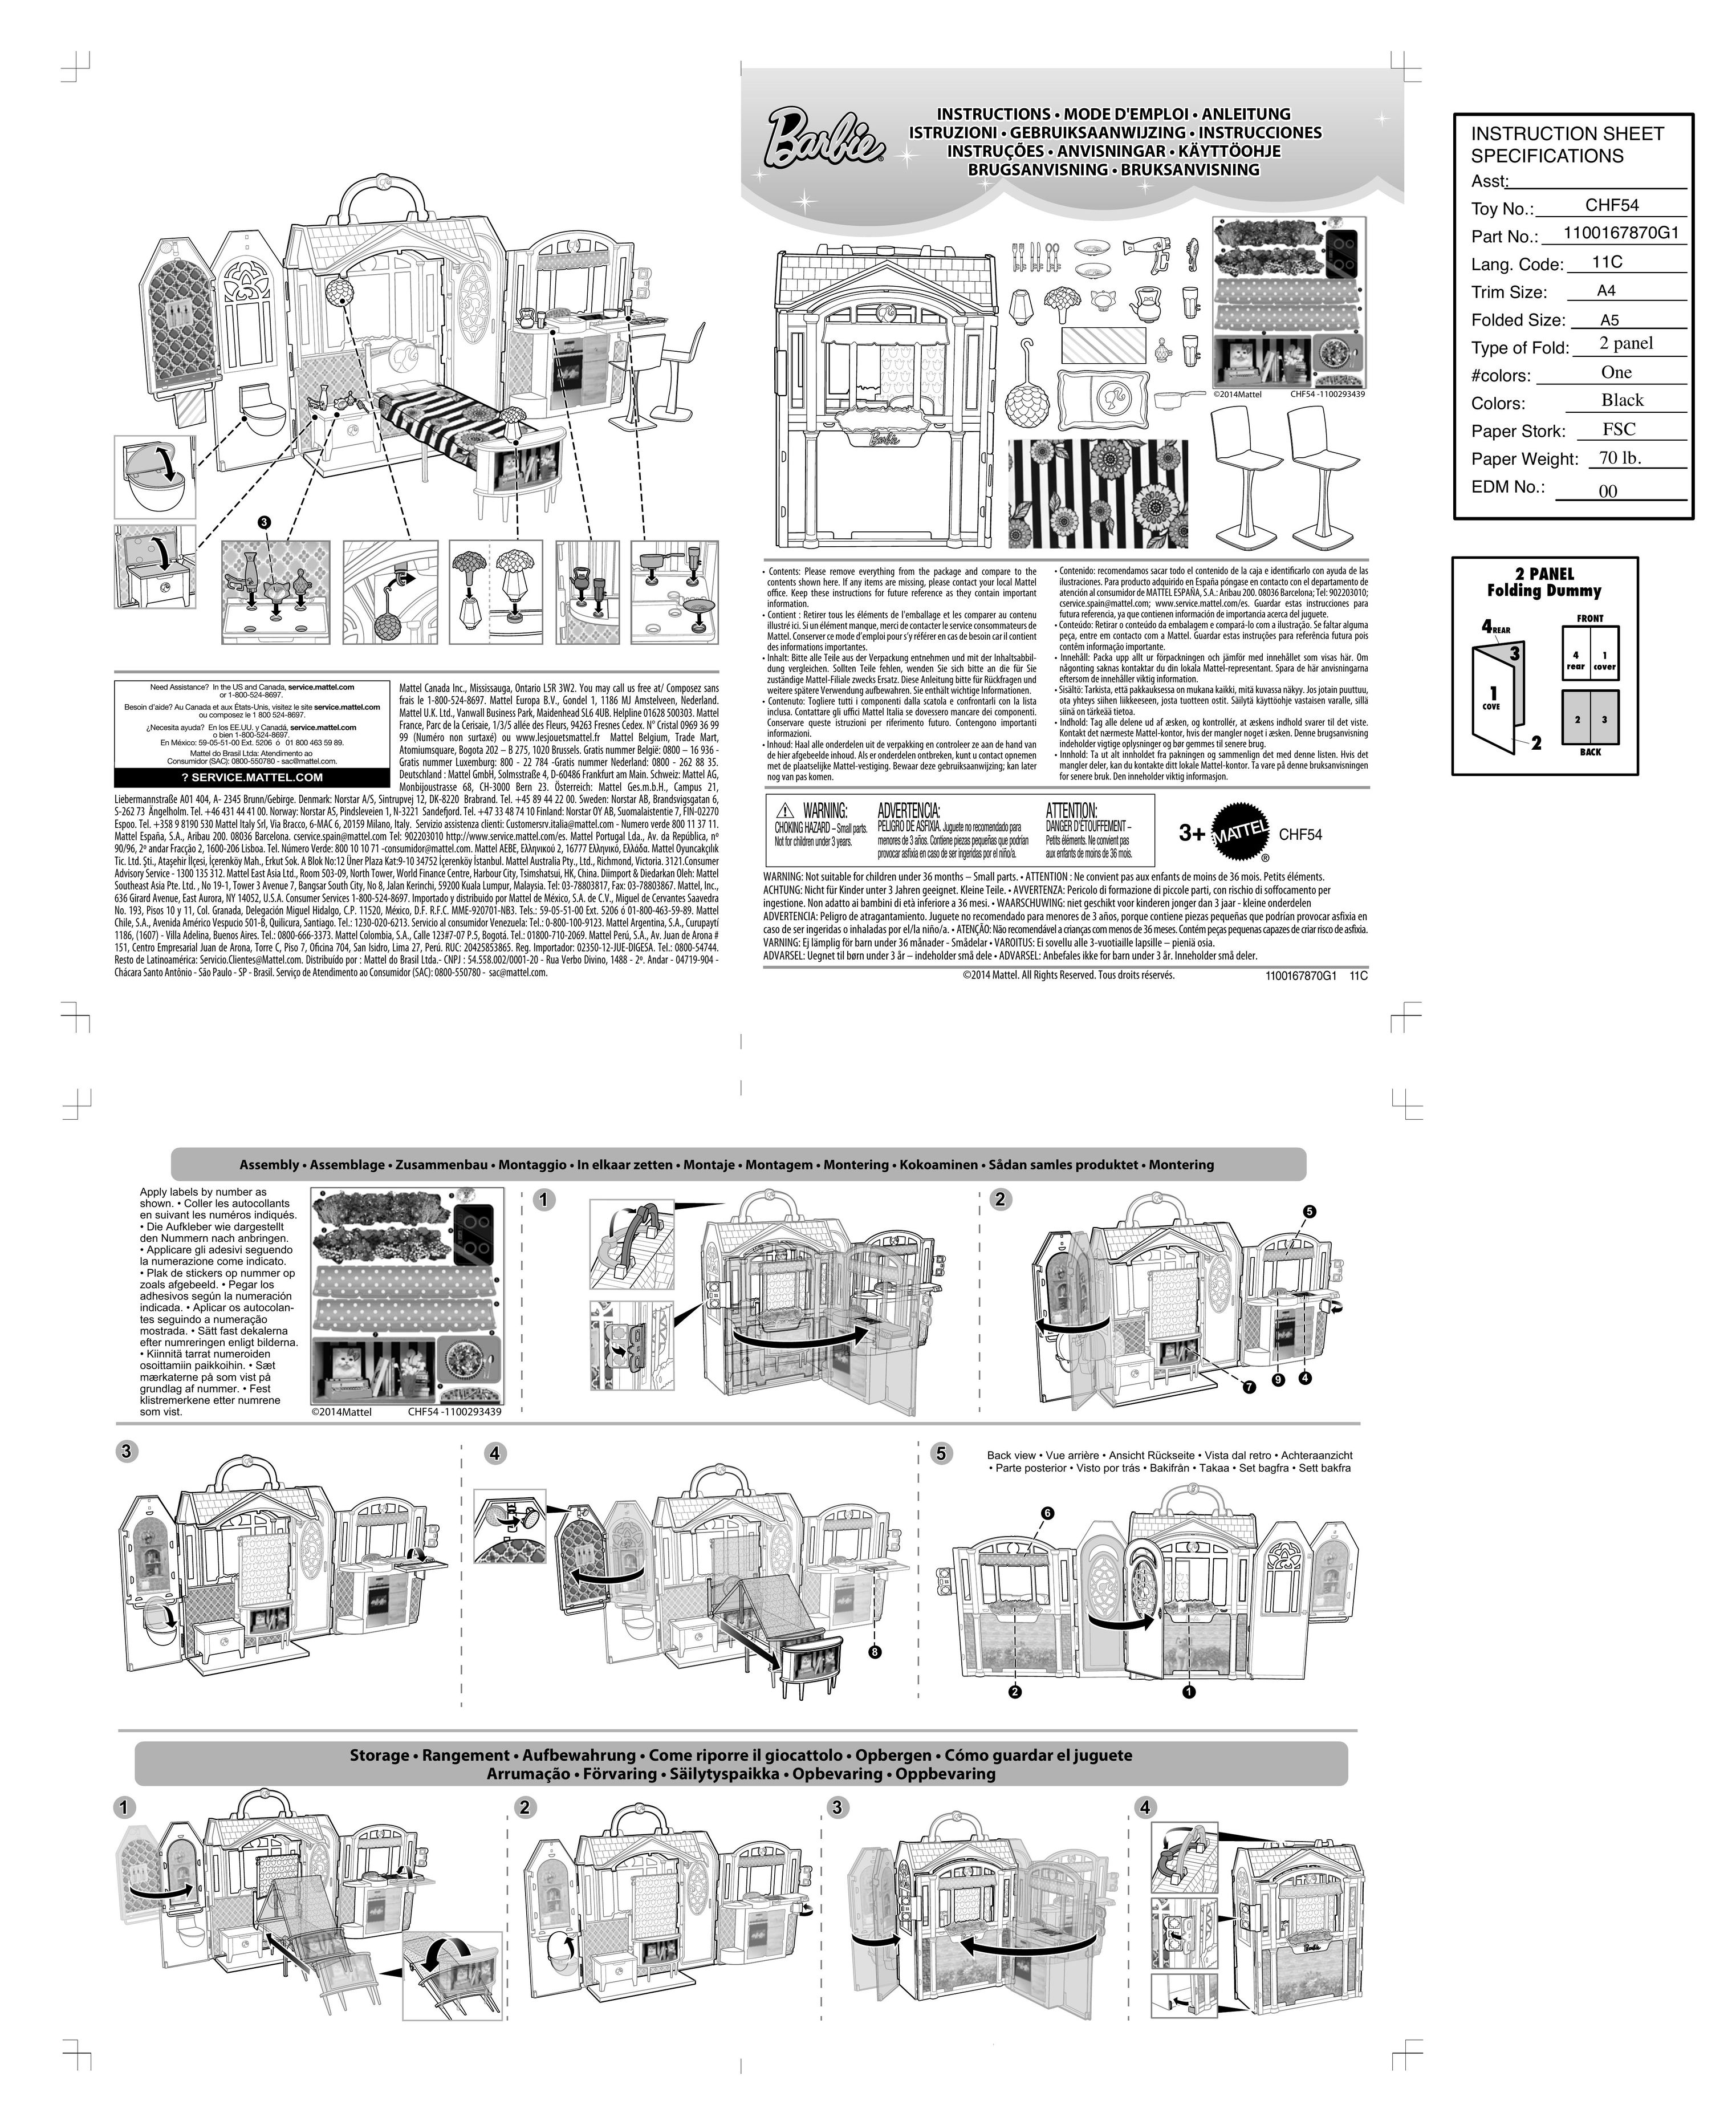 Mattel CHF54 Dollhouse User Manual